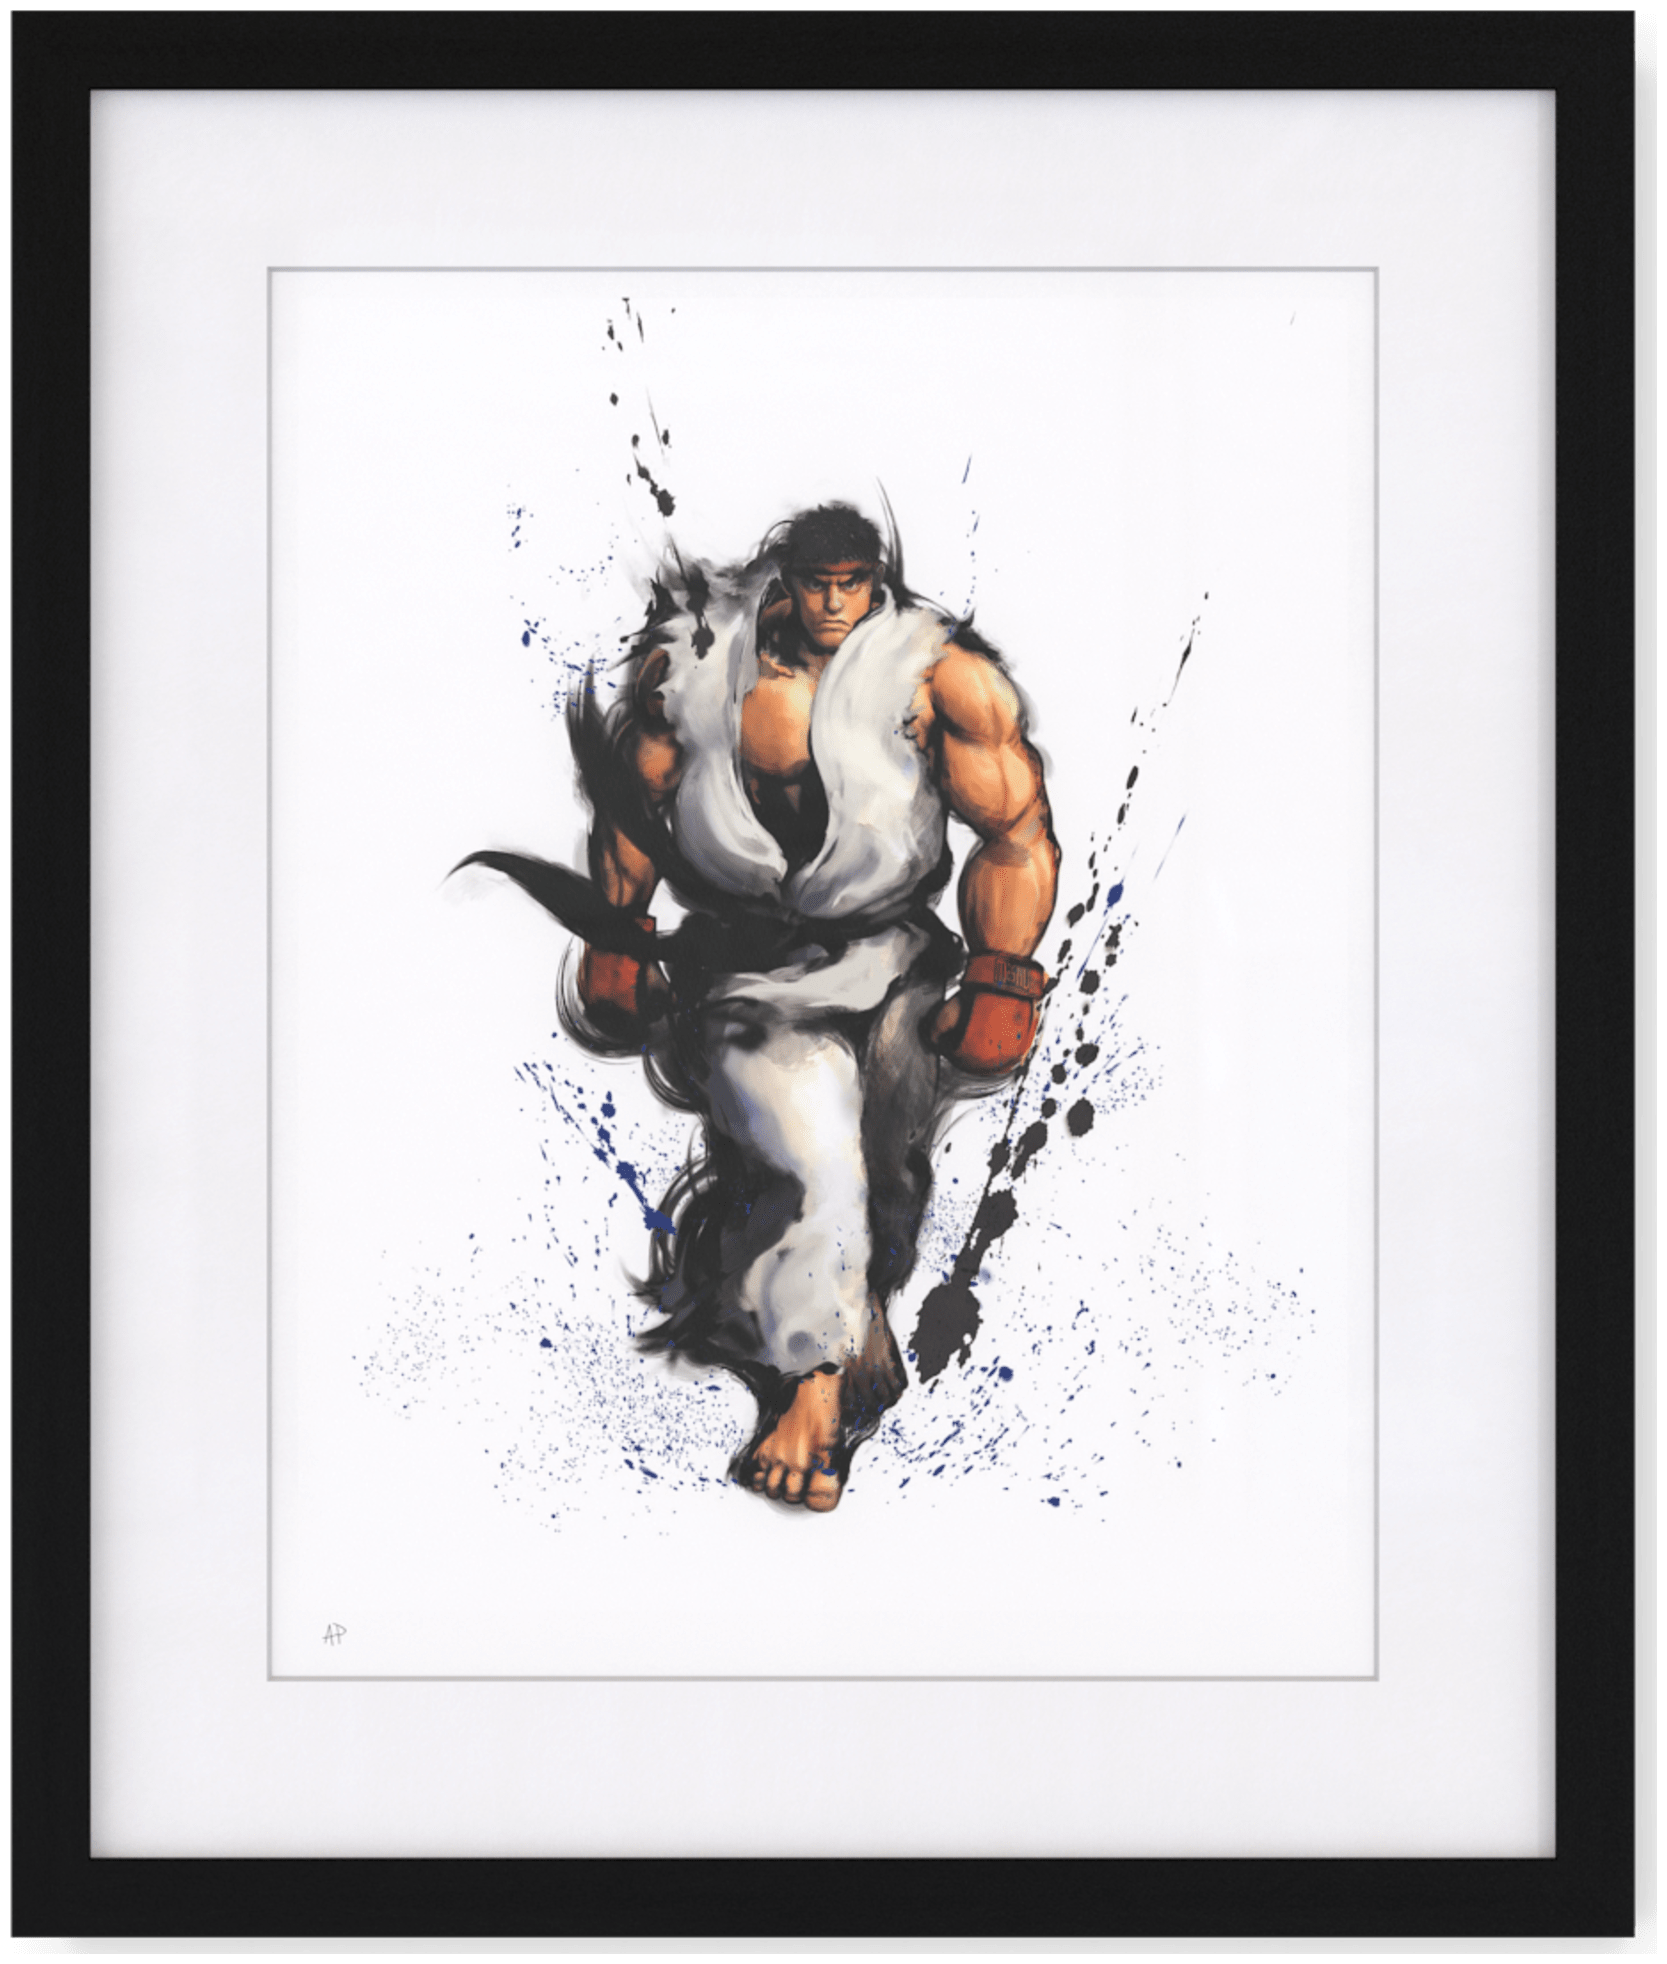 Ryu artwork #2, Street Fighter 4